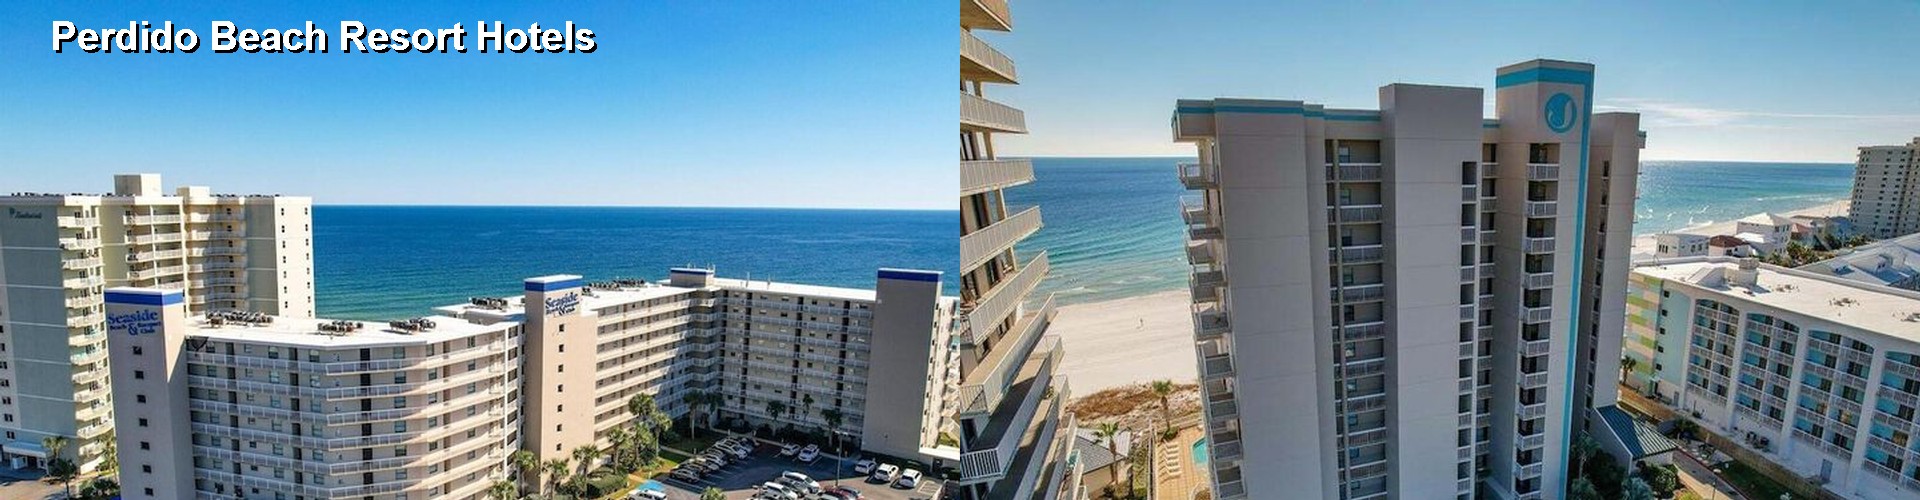 5 Best Hotels near Perdido Beach Resort